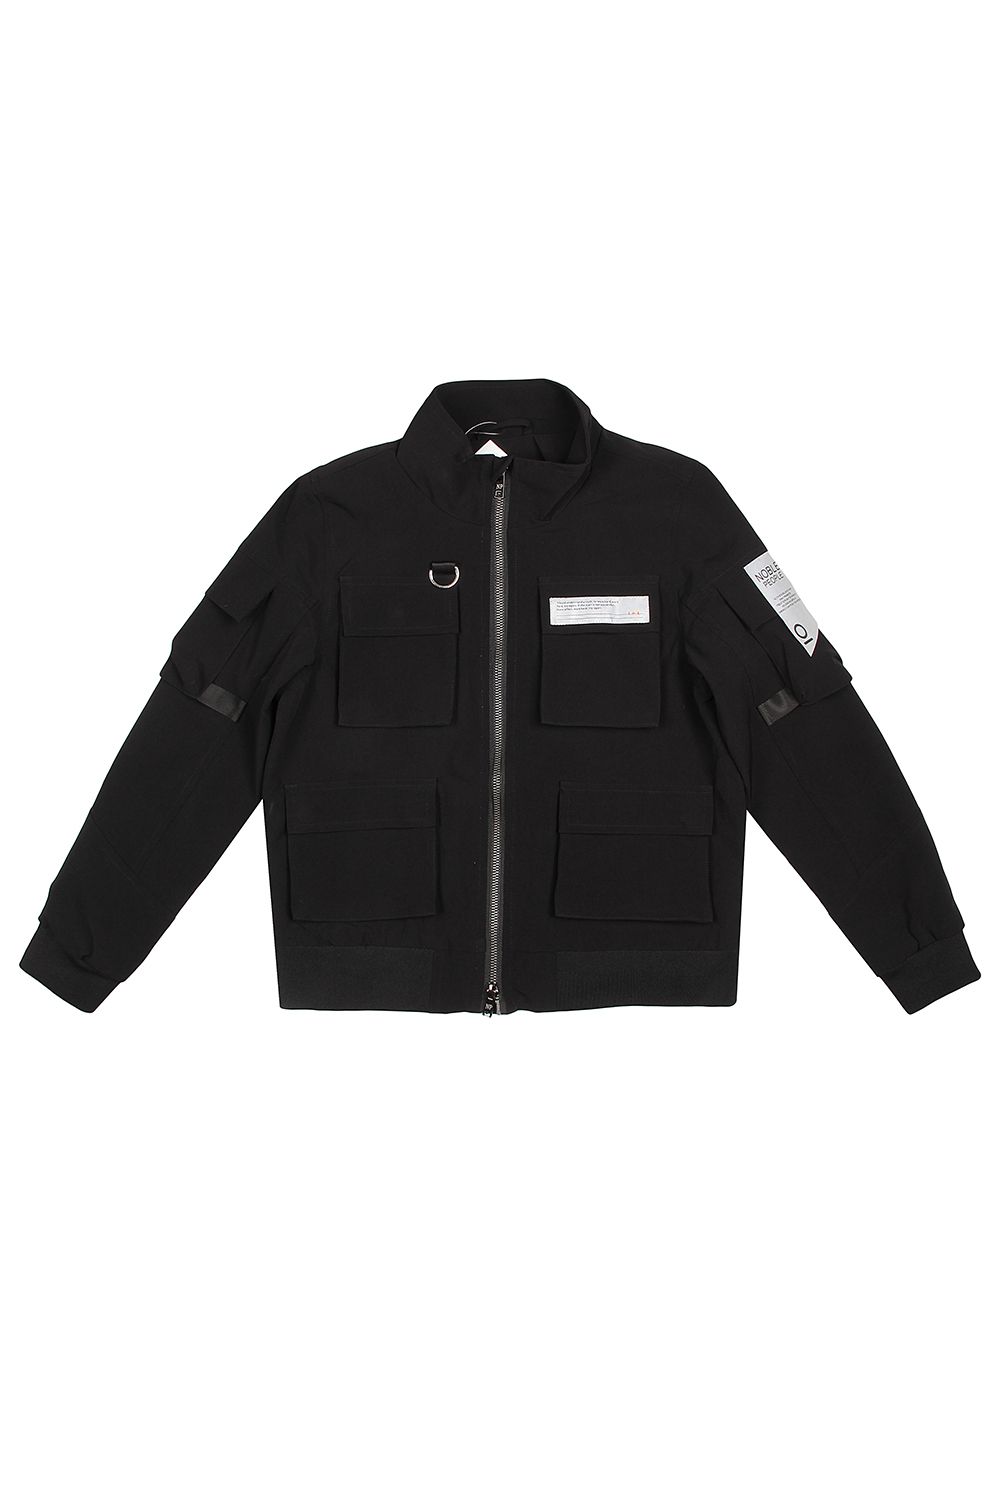 Куртка Noble People, размер 122, цвет черный 18607-520 - фото 2